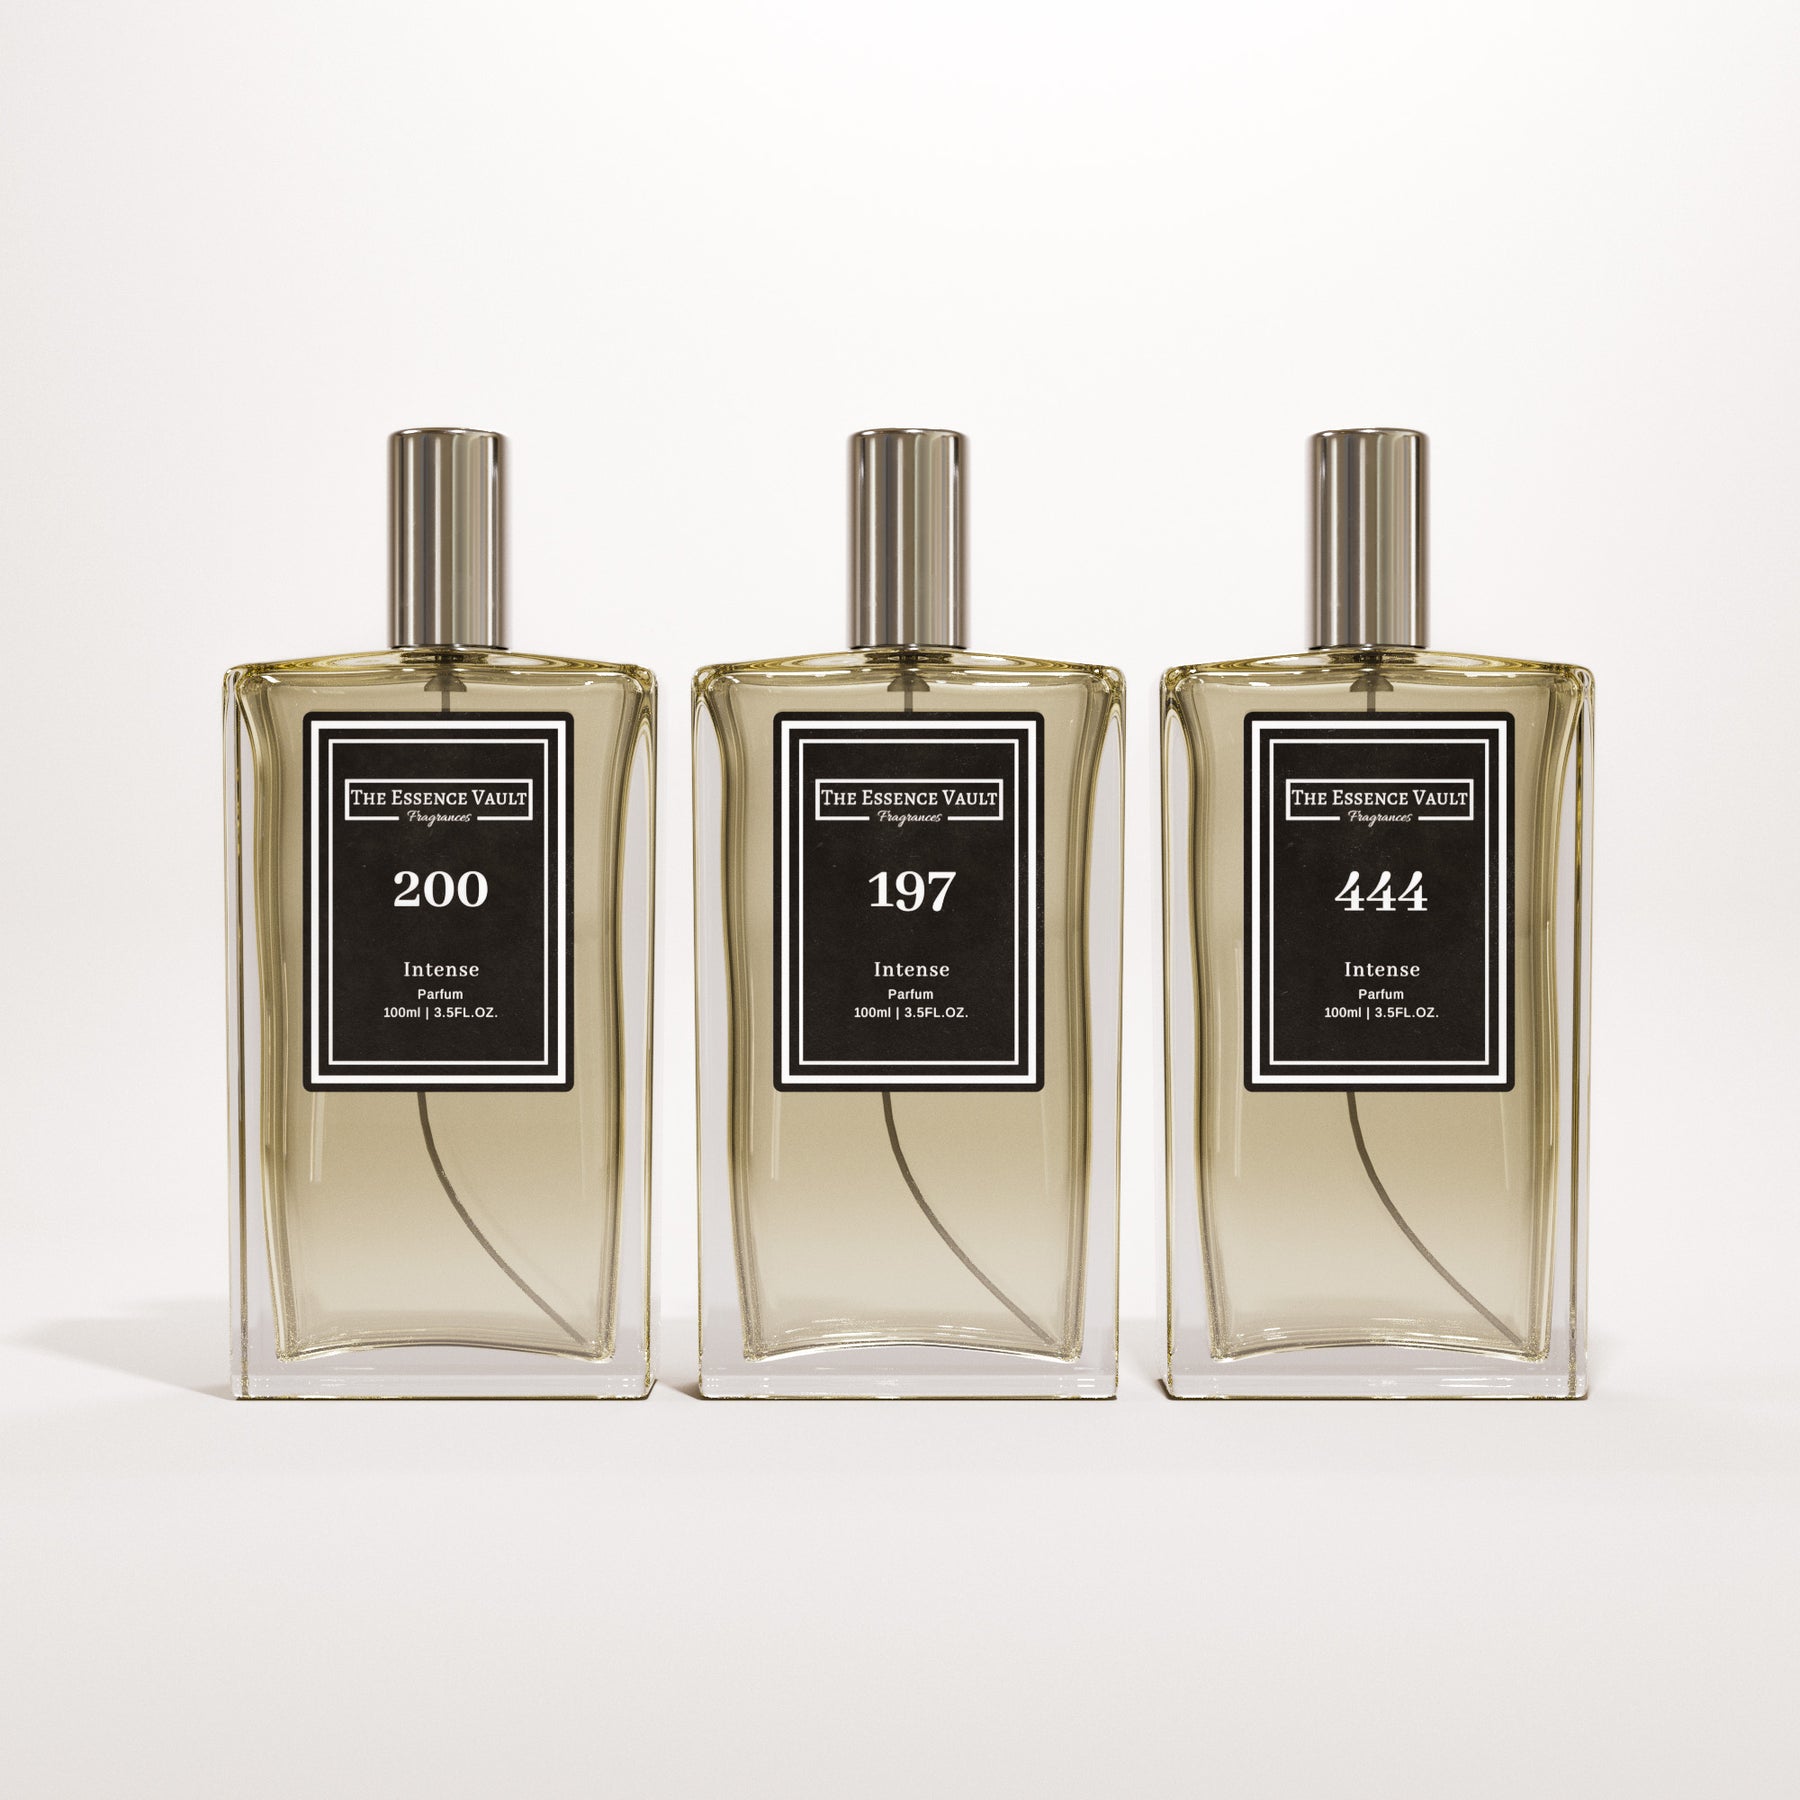 “Essential Elegance: The Essence Vault UK’s Minimalist Perfume Collections”